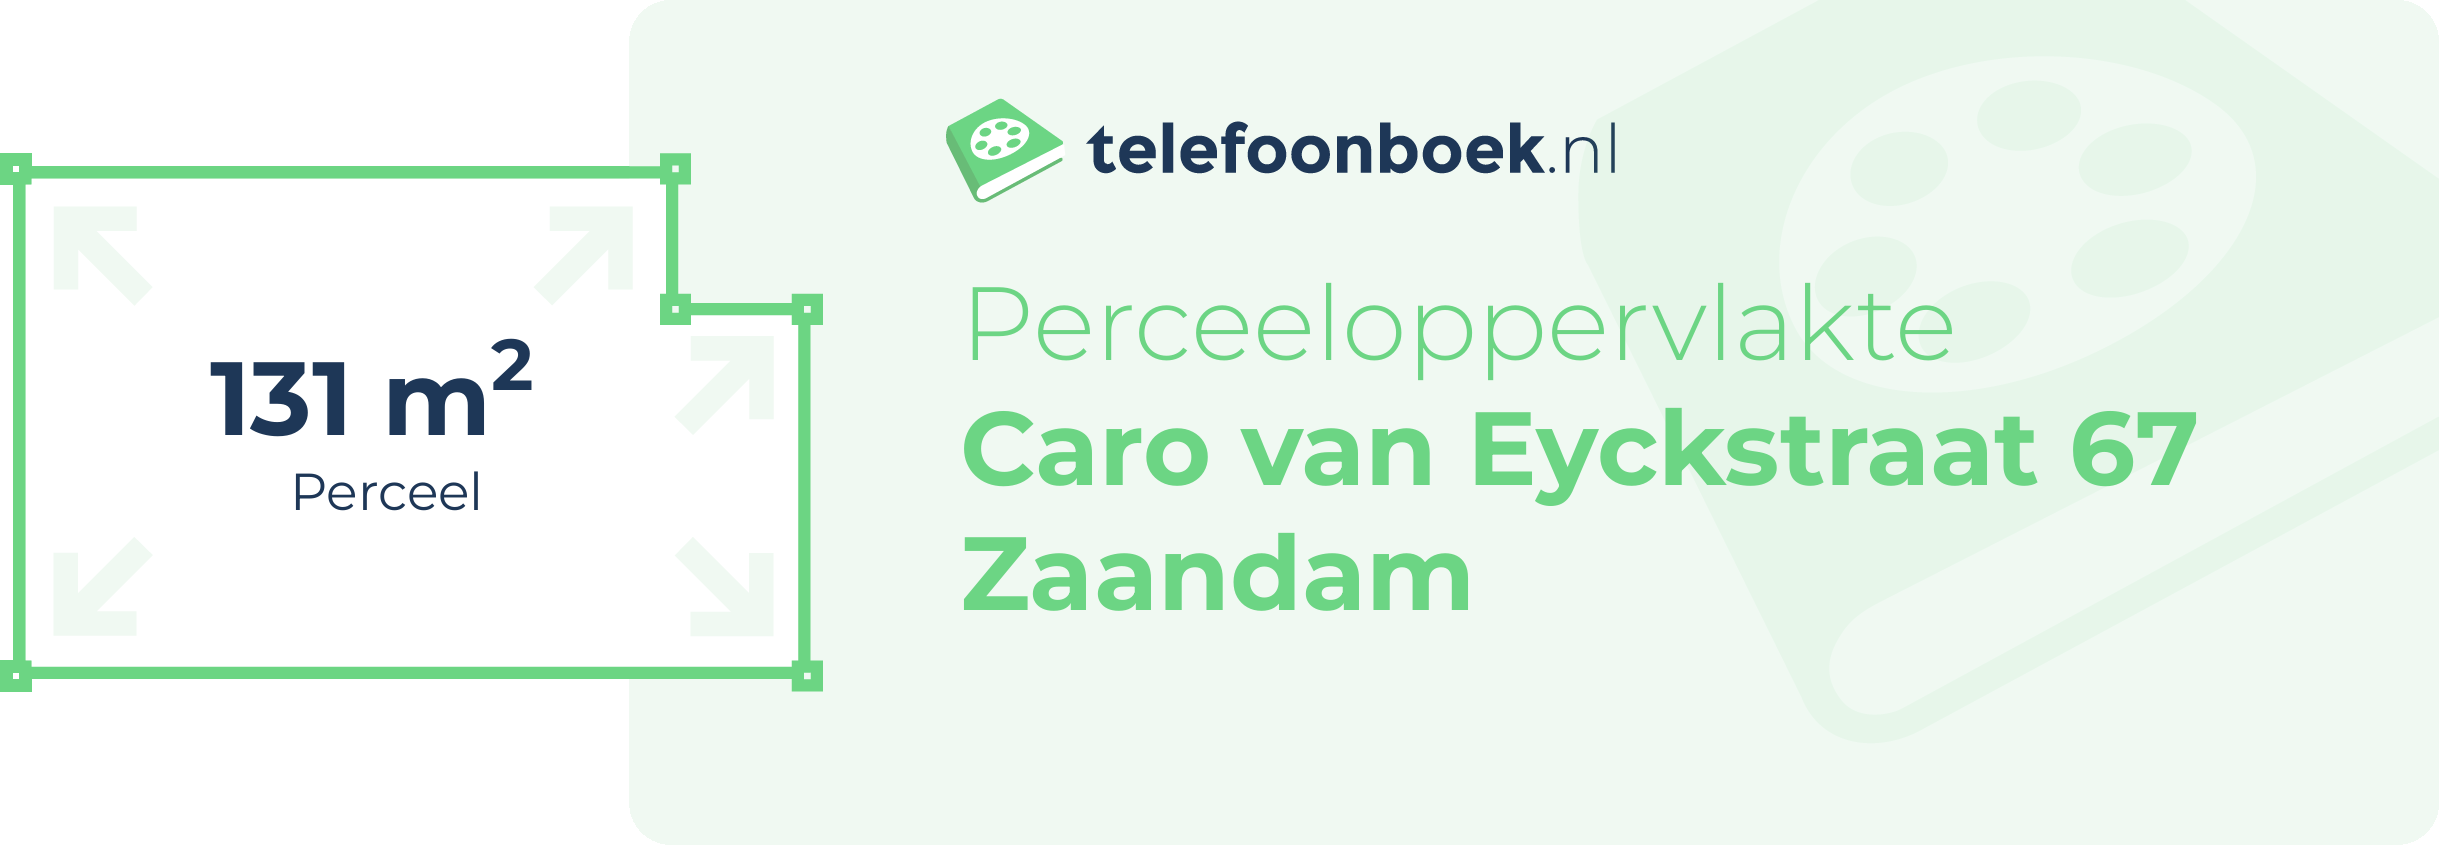 Perceeloppervlakte Caro Van Eyckstraat 67 Zaandam